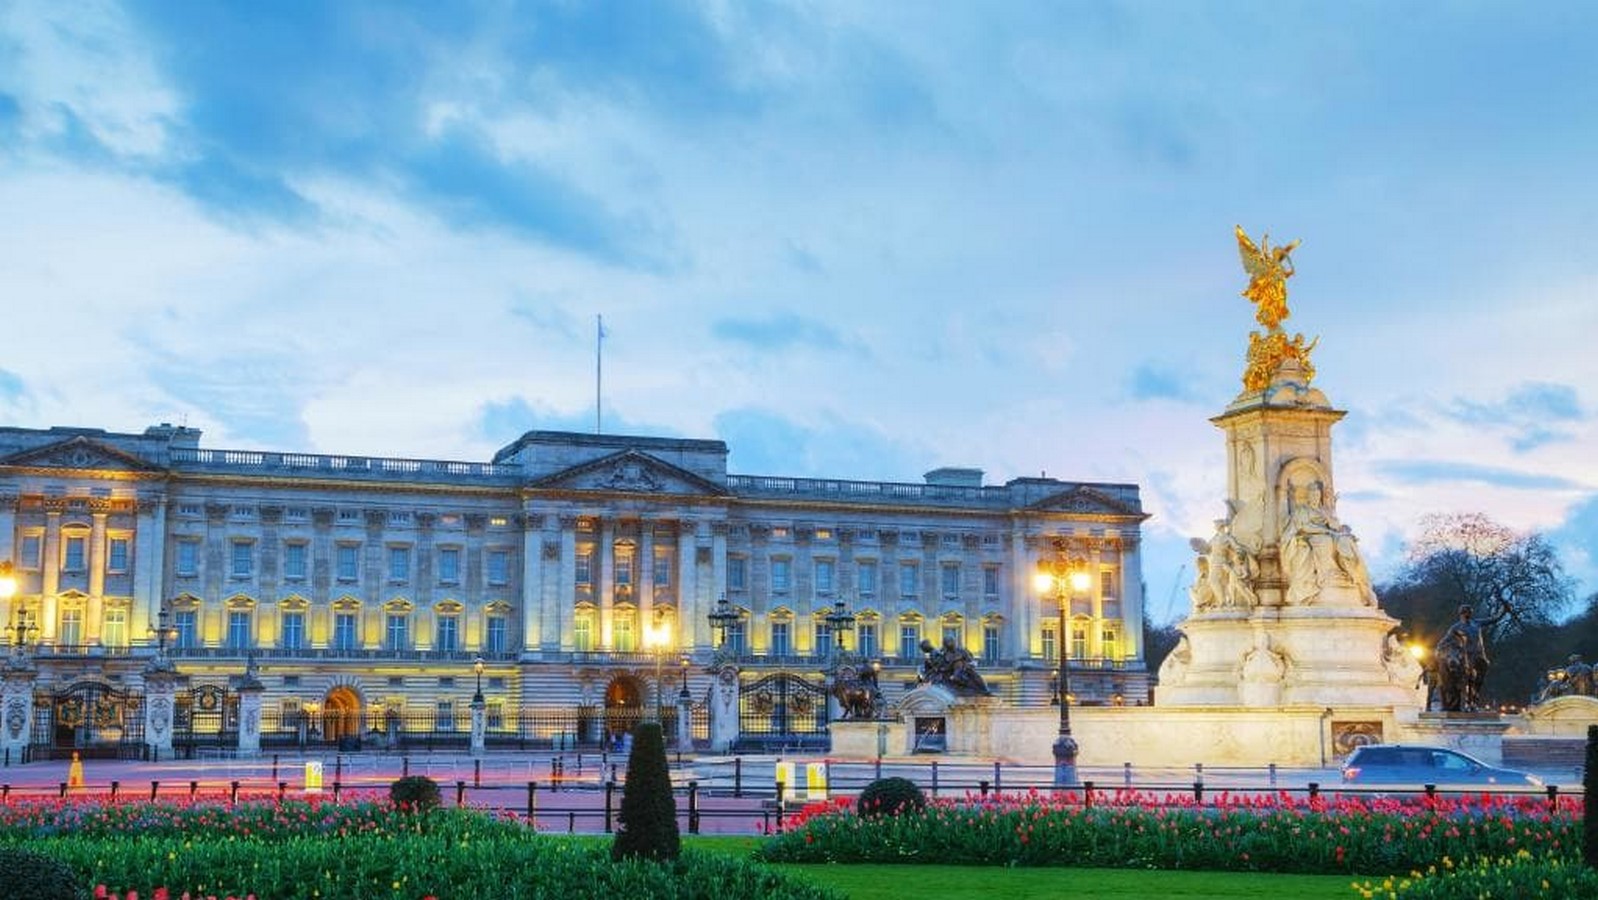  Buckingham Palace by John Nash- Home to the Monarchs- sheet10